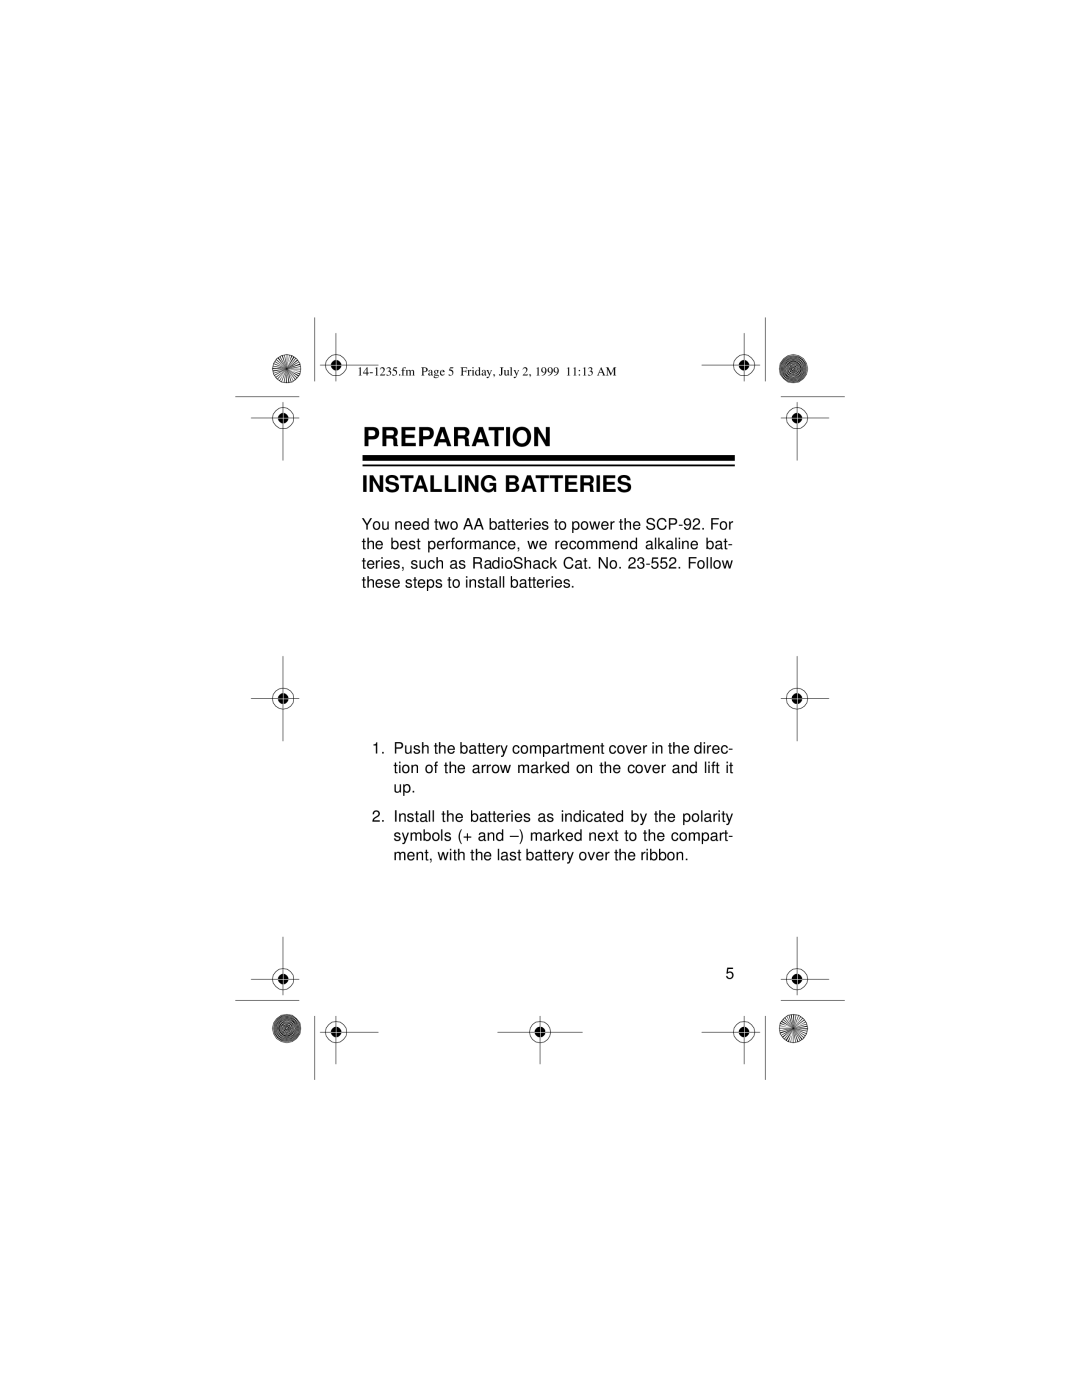 Optimus SCP-92 owner manual Preparation, Installing Batteries 